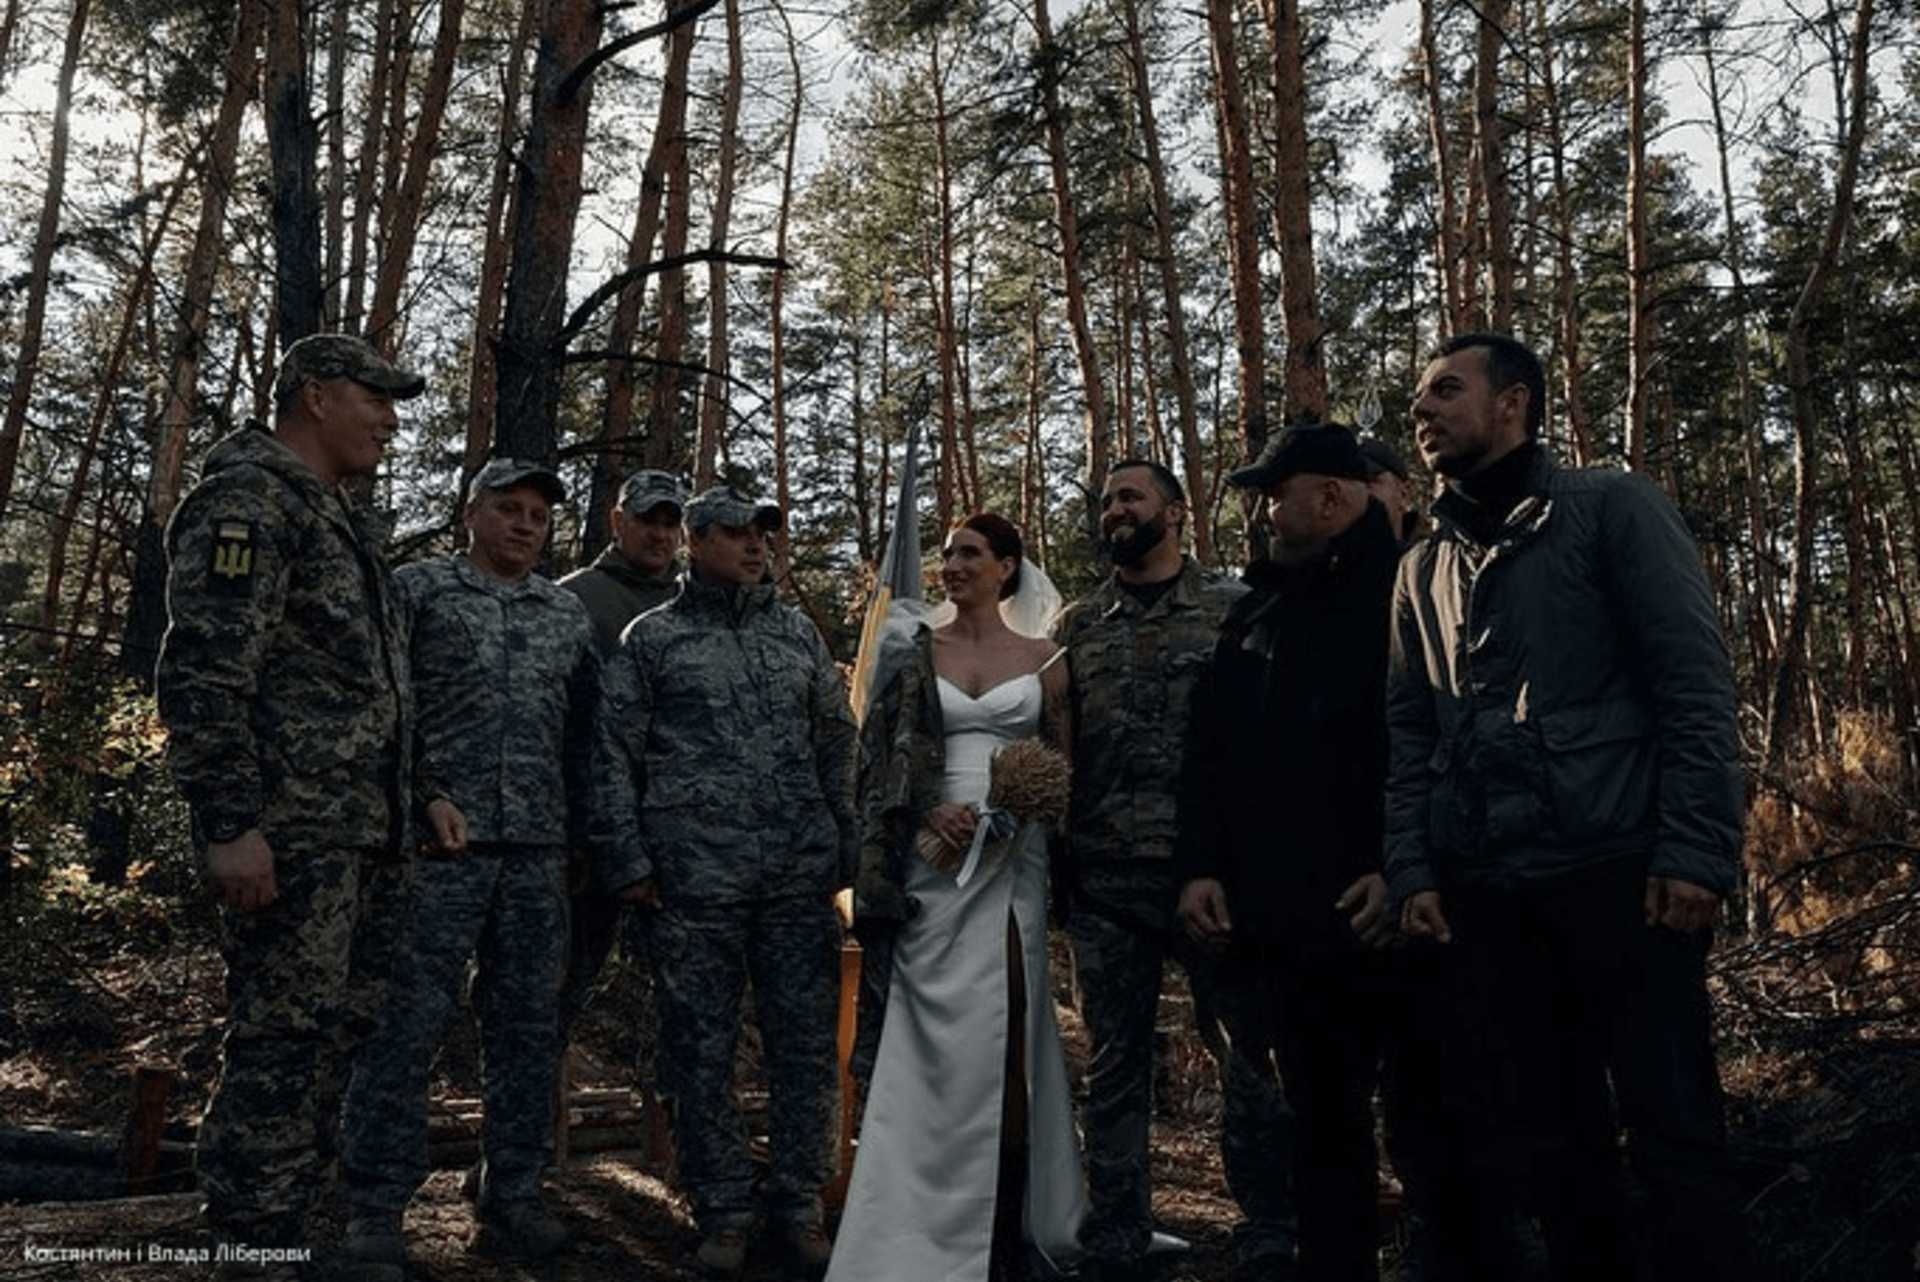 Svatba se konala v lese.